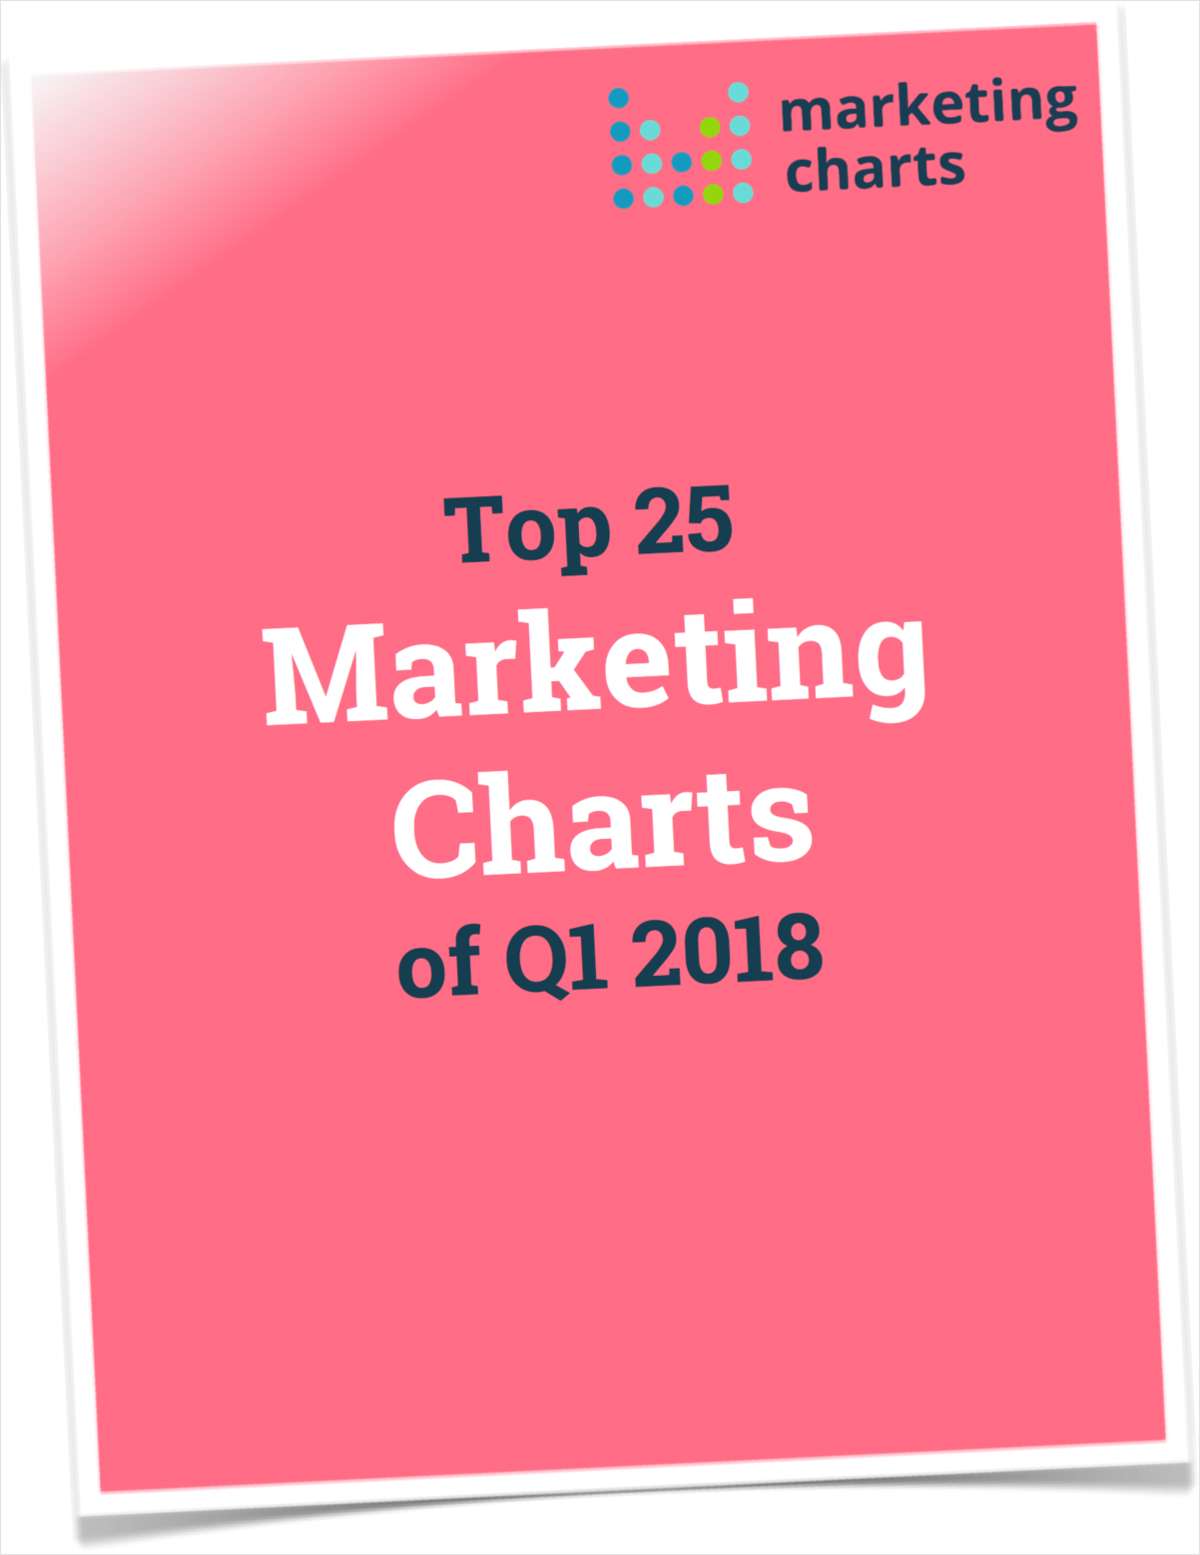 Top 25 Marketing Charts of Q1 2018